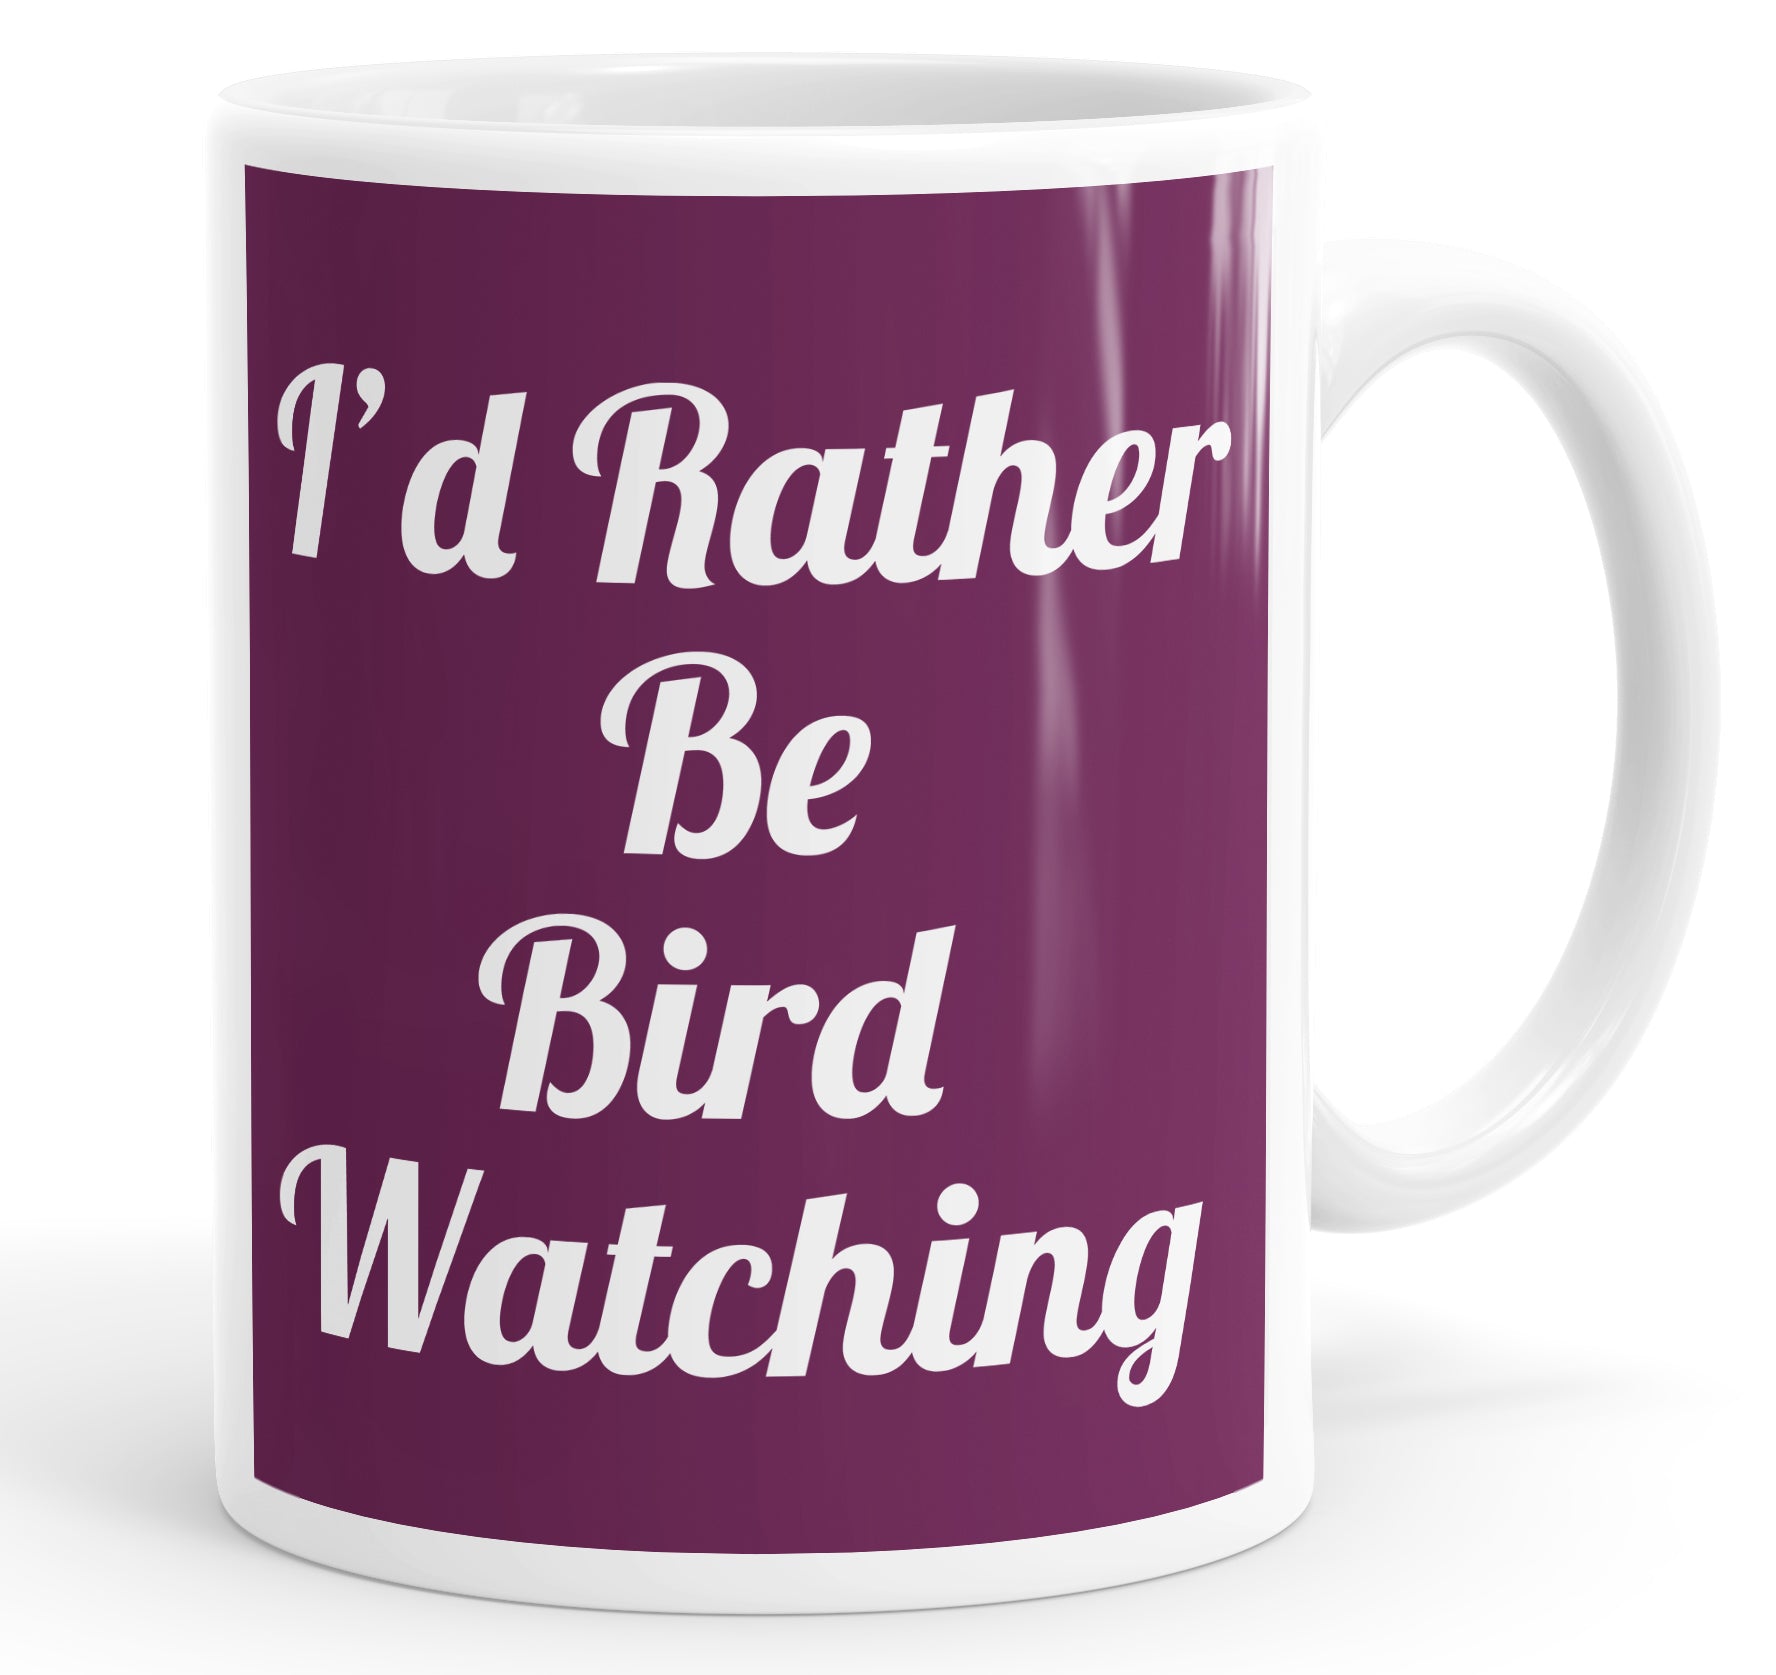 I'd Rather Be Bird Watching Funny Mug Cup